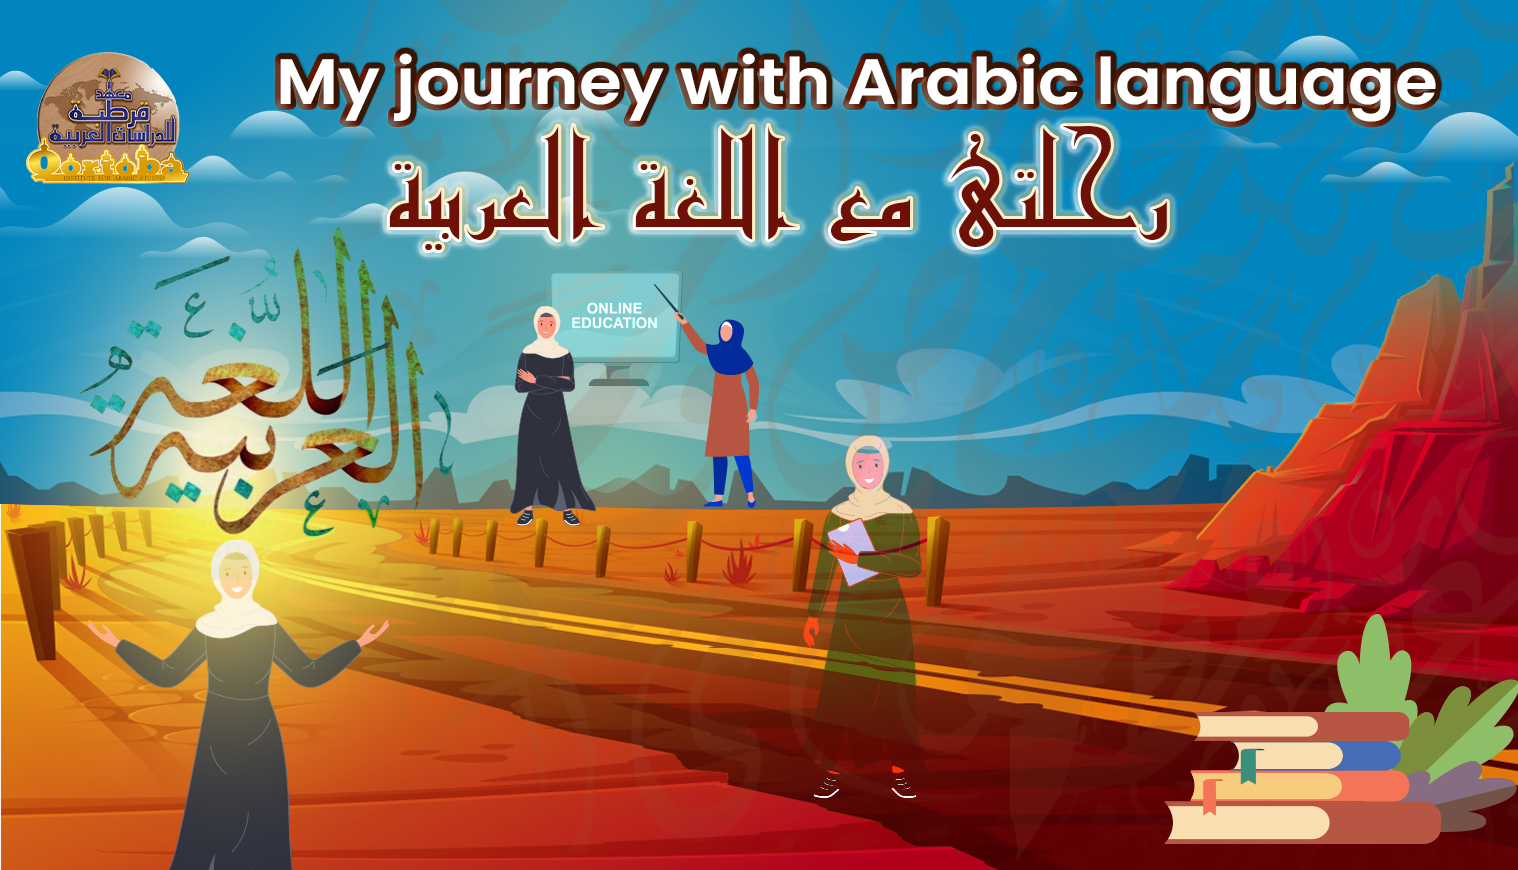 My journey with Arabic language by Saima Bhatty (UK) 2